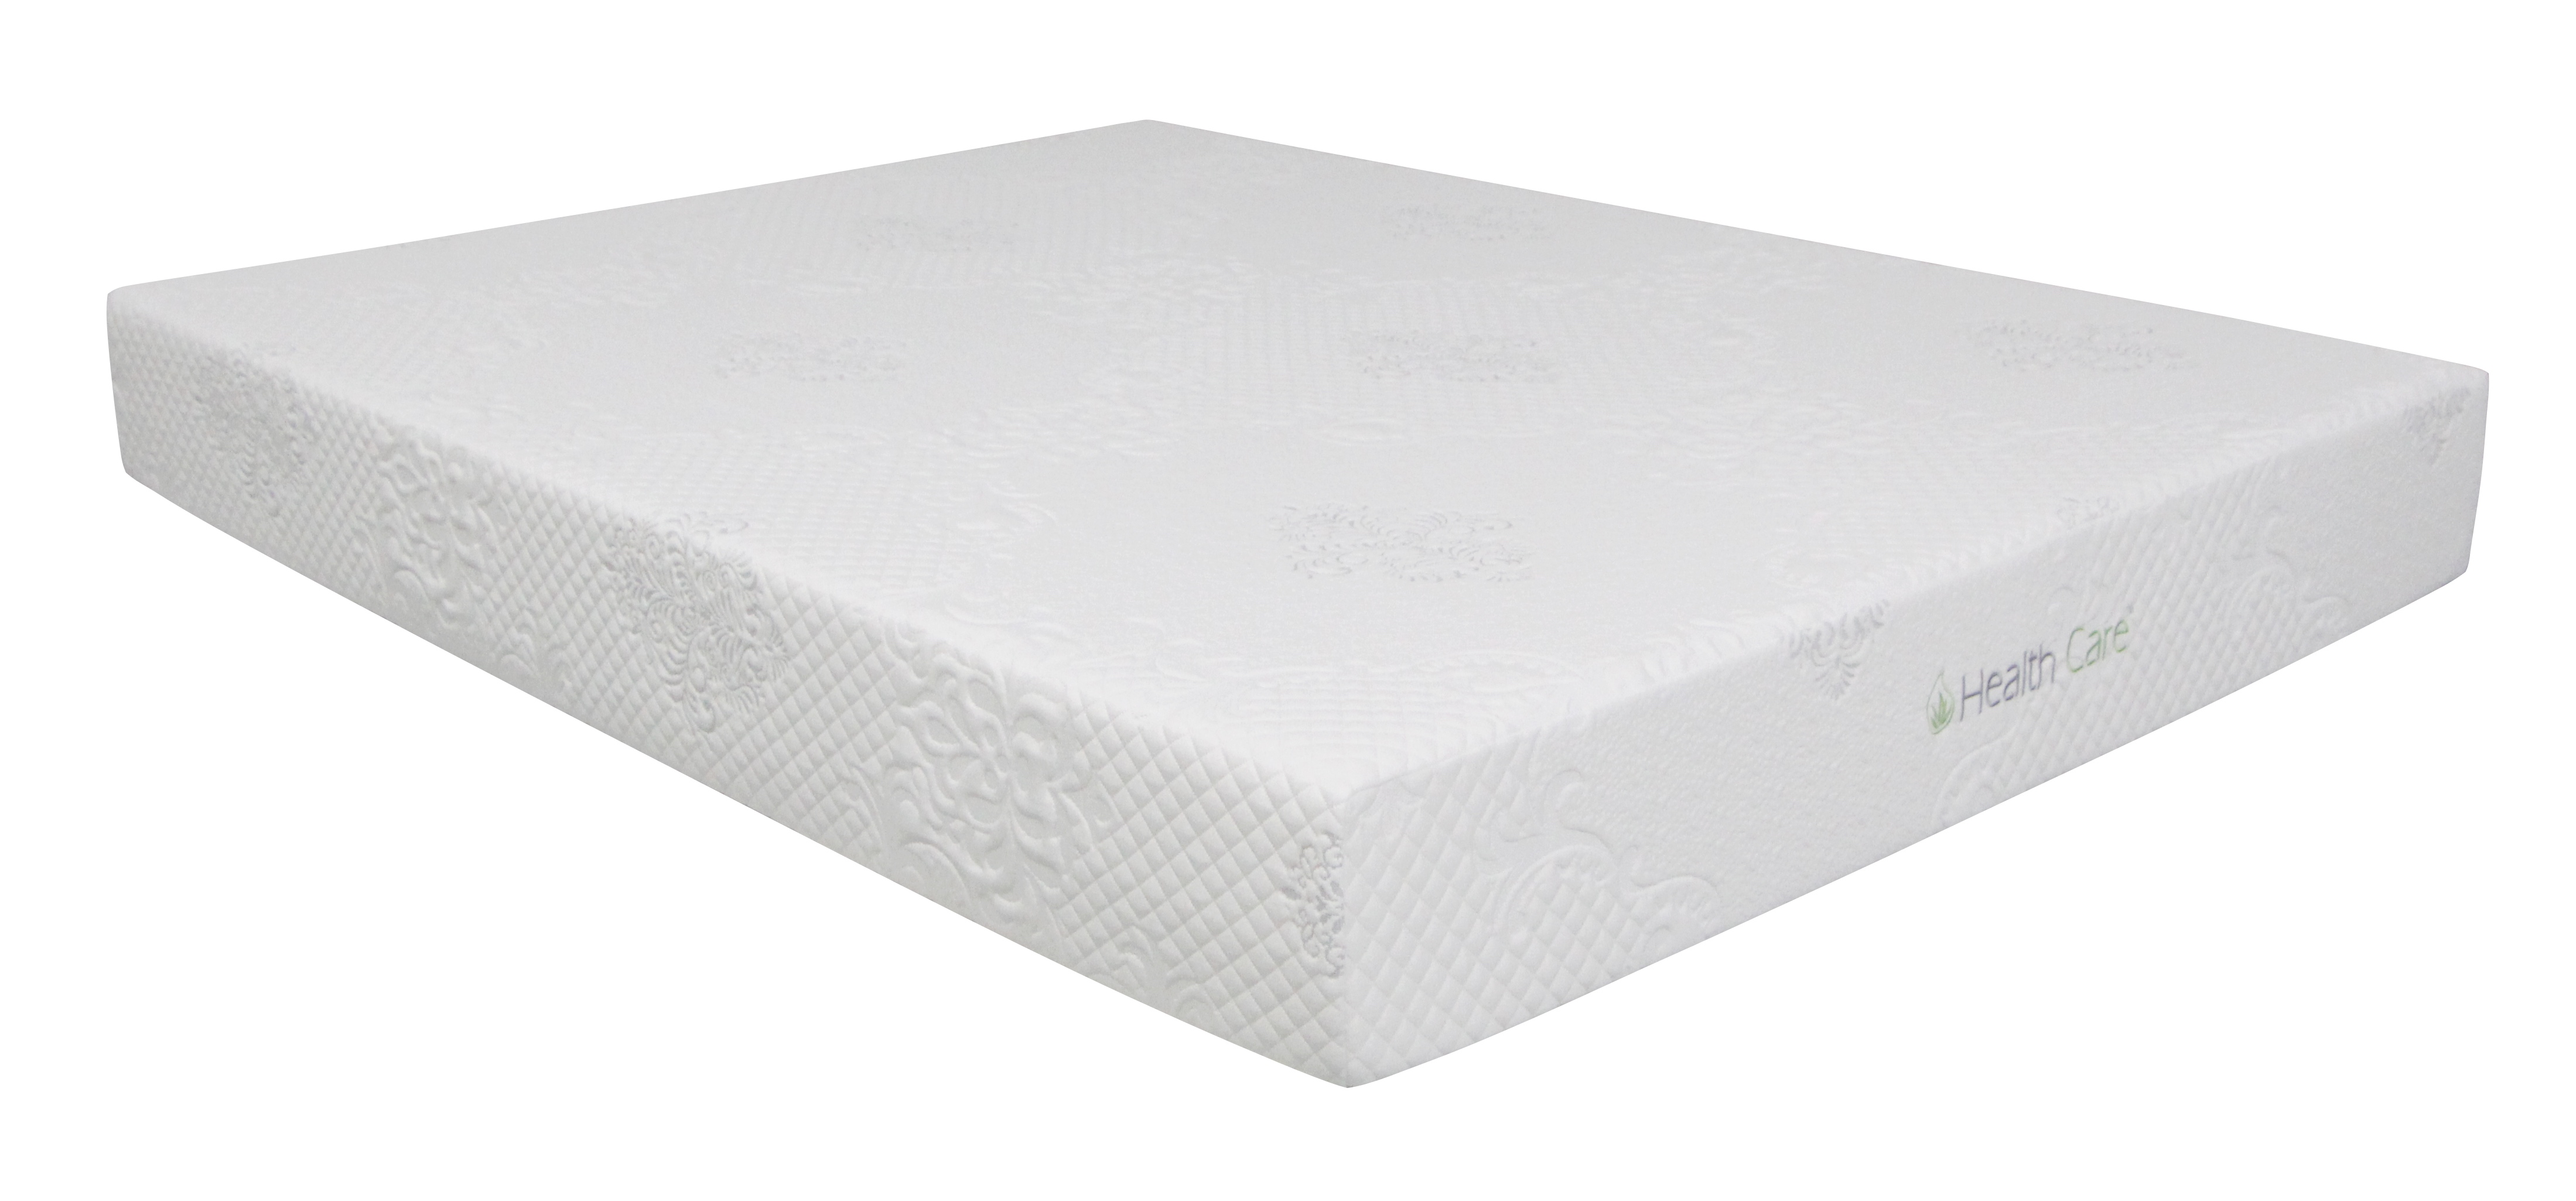 memory foam mattress health